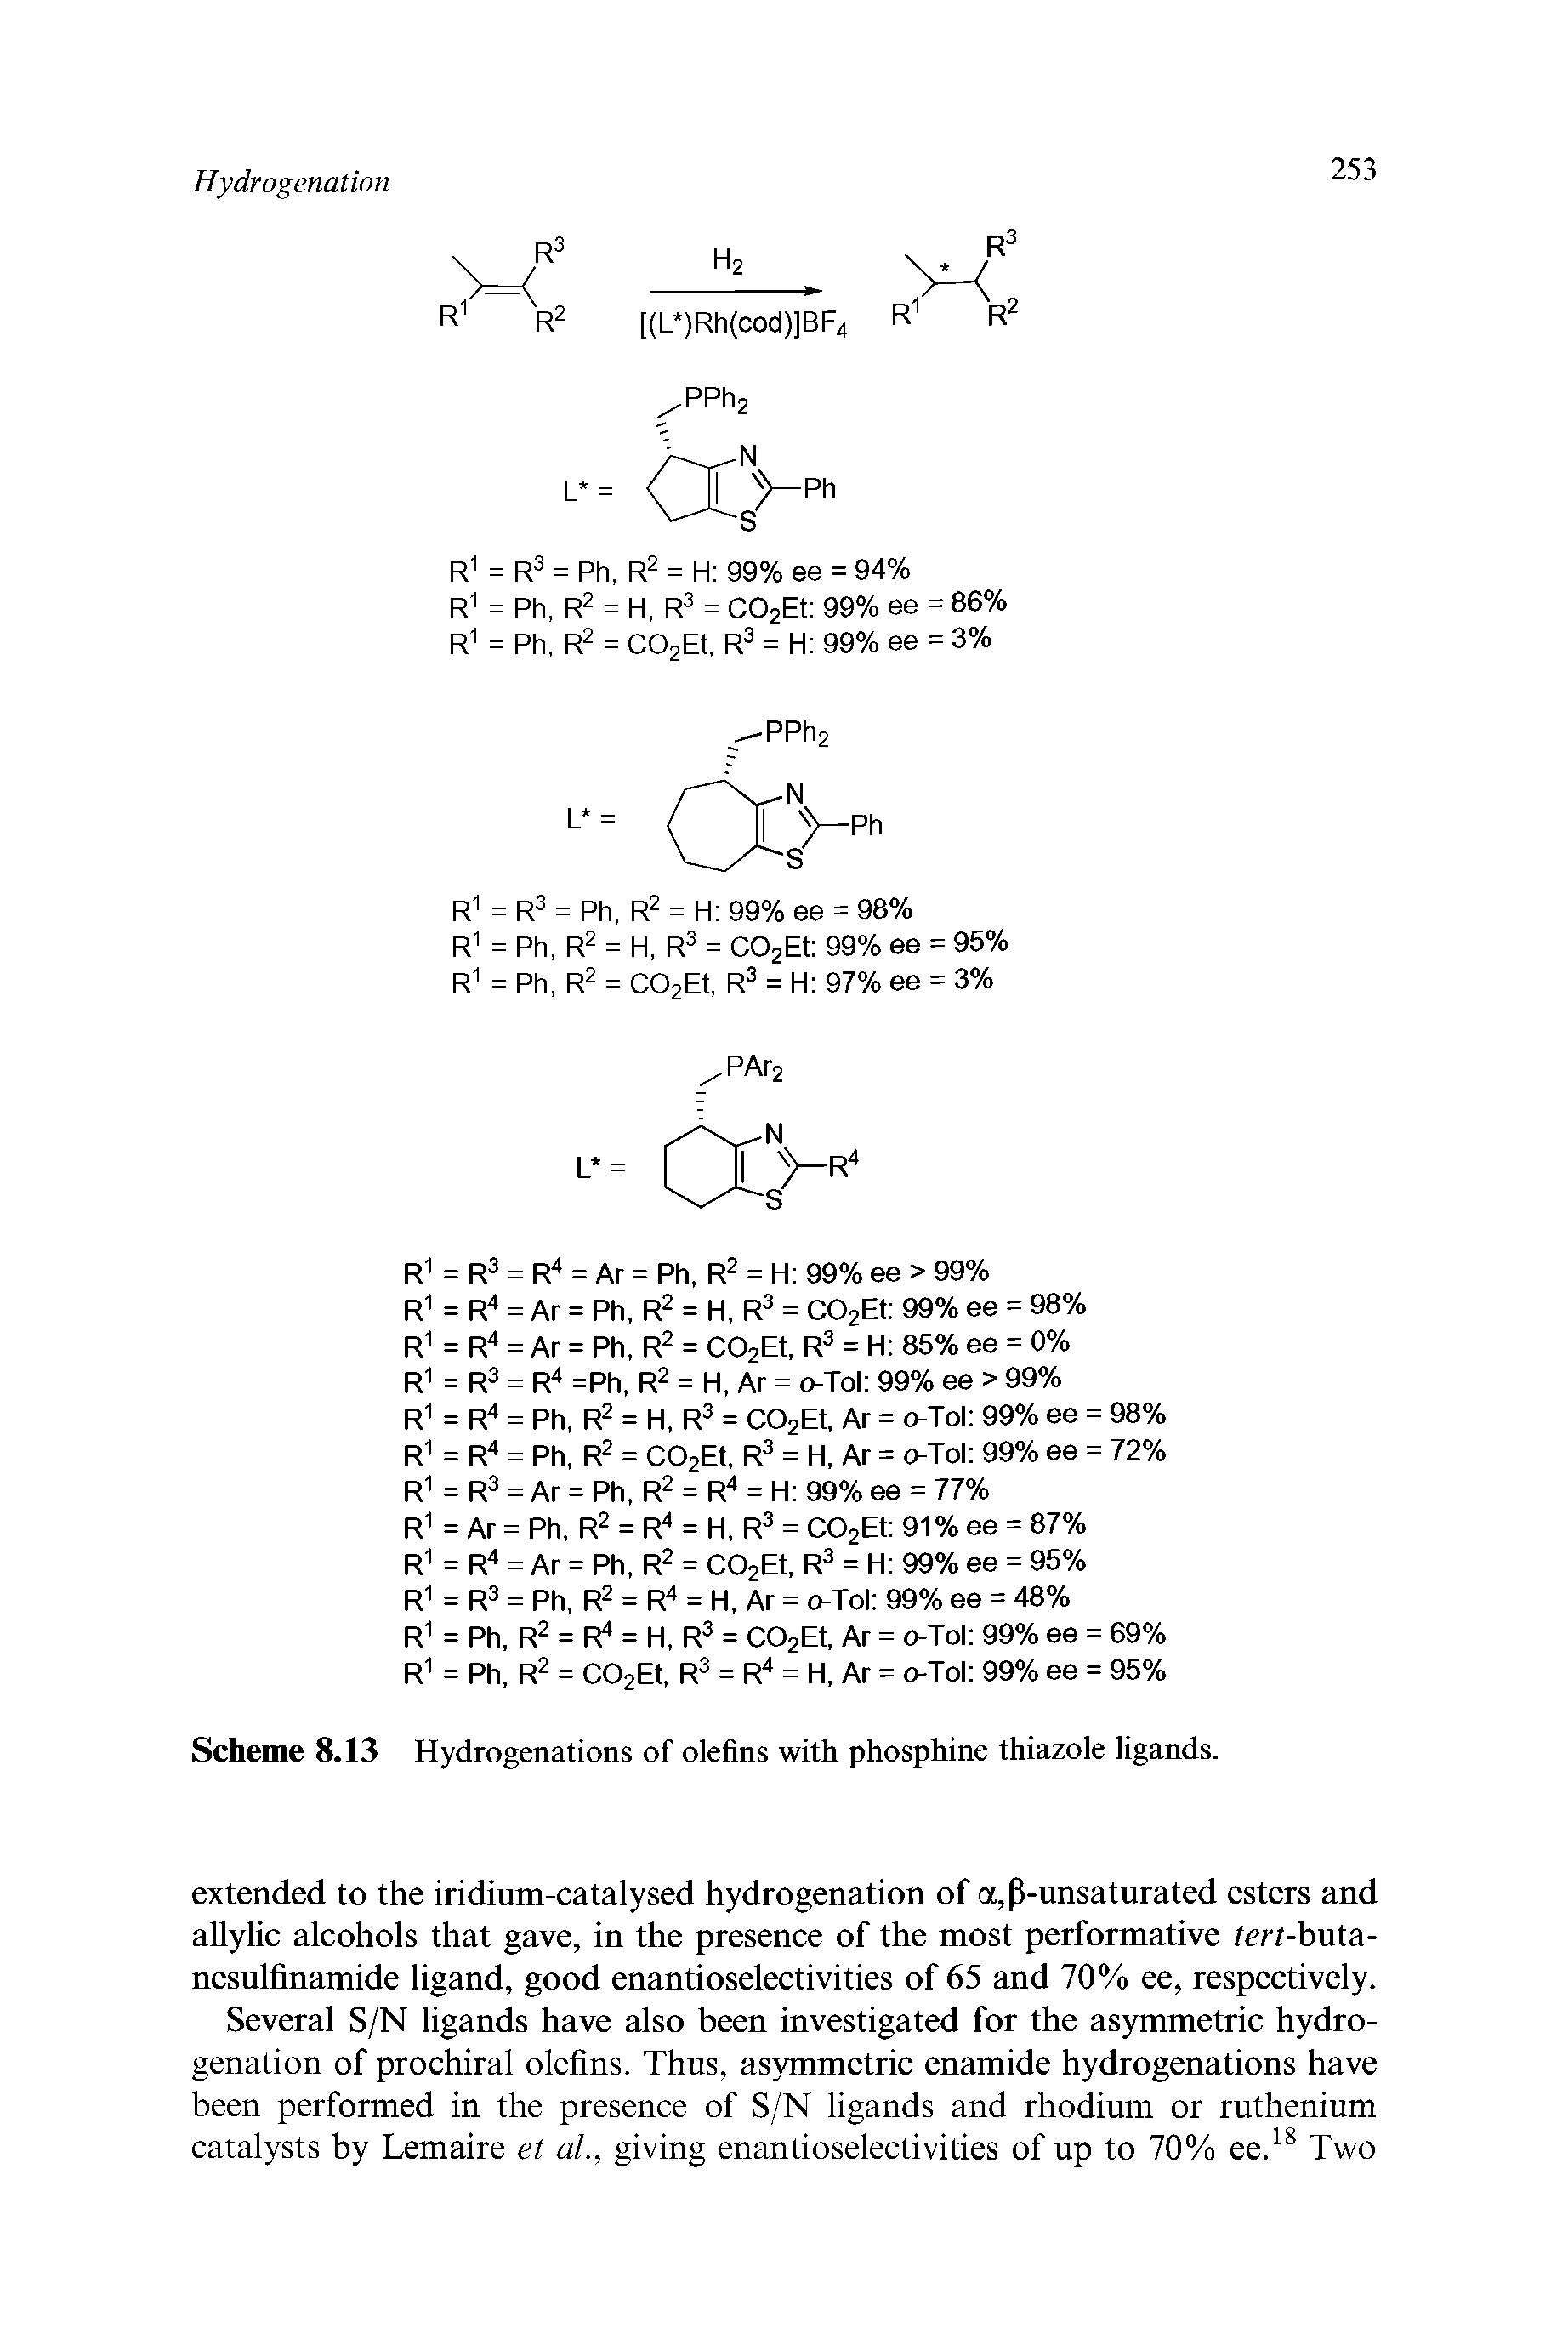 Scheme 8.13 Hydrogenations of olefins with phosphine thiazole ligands.